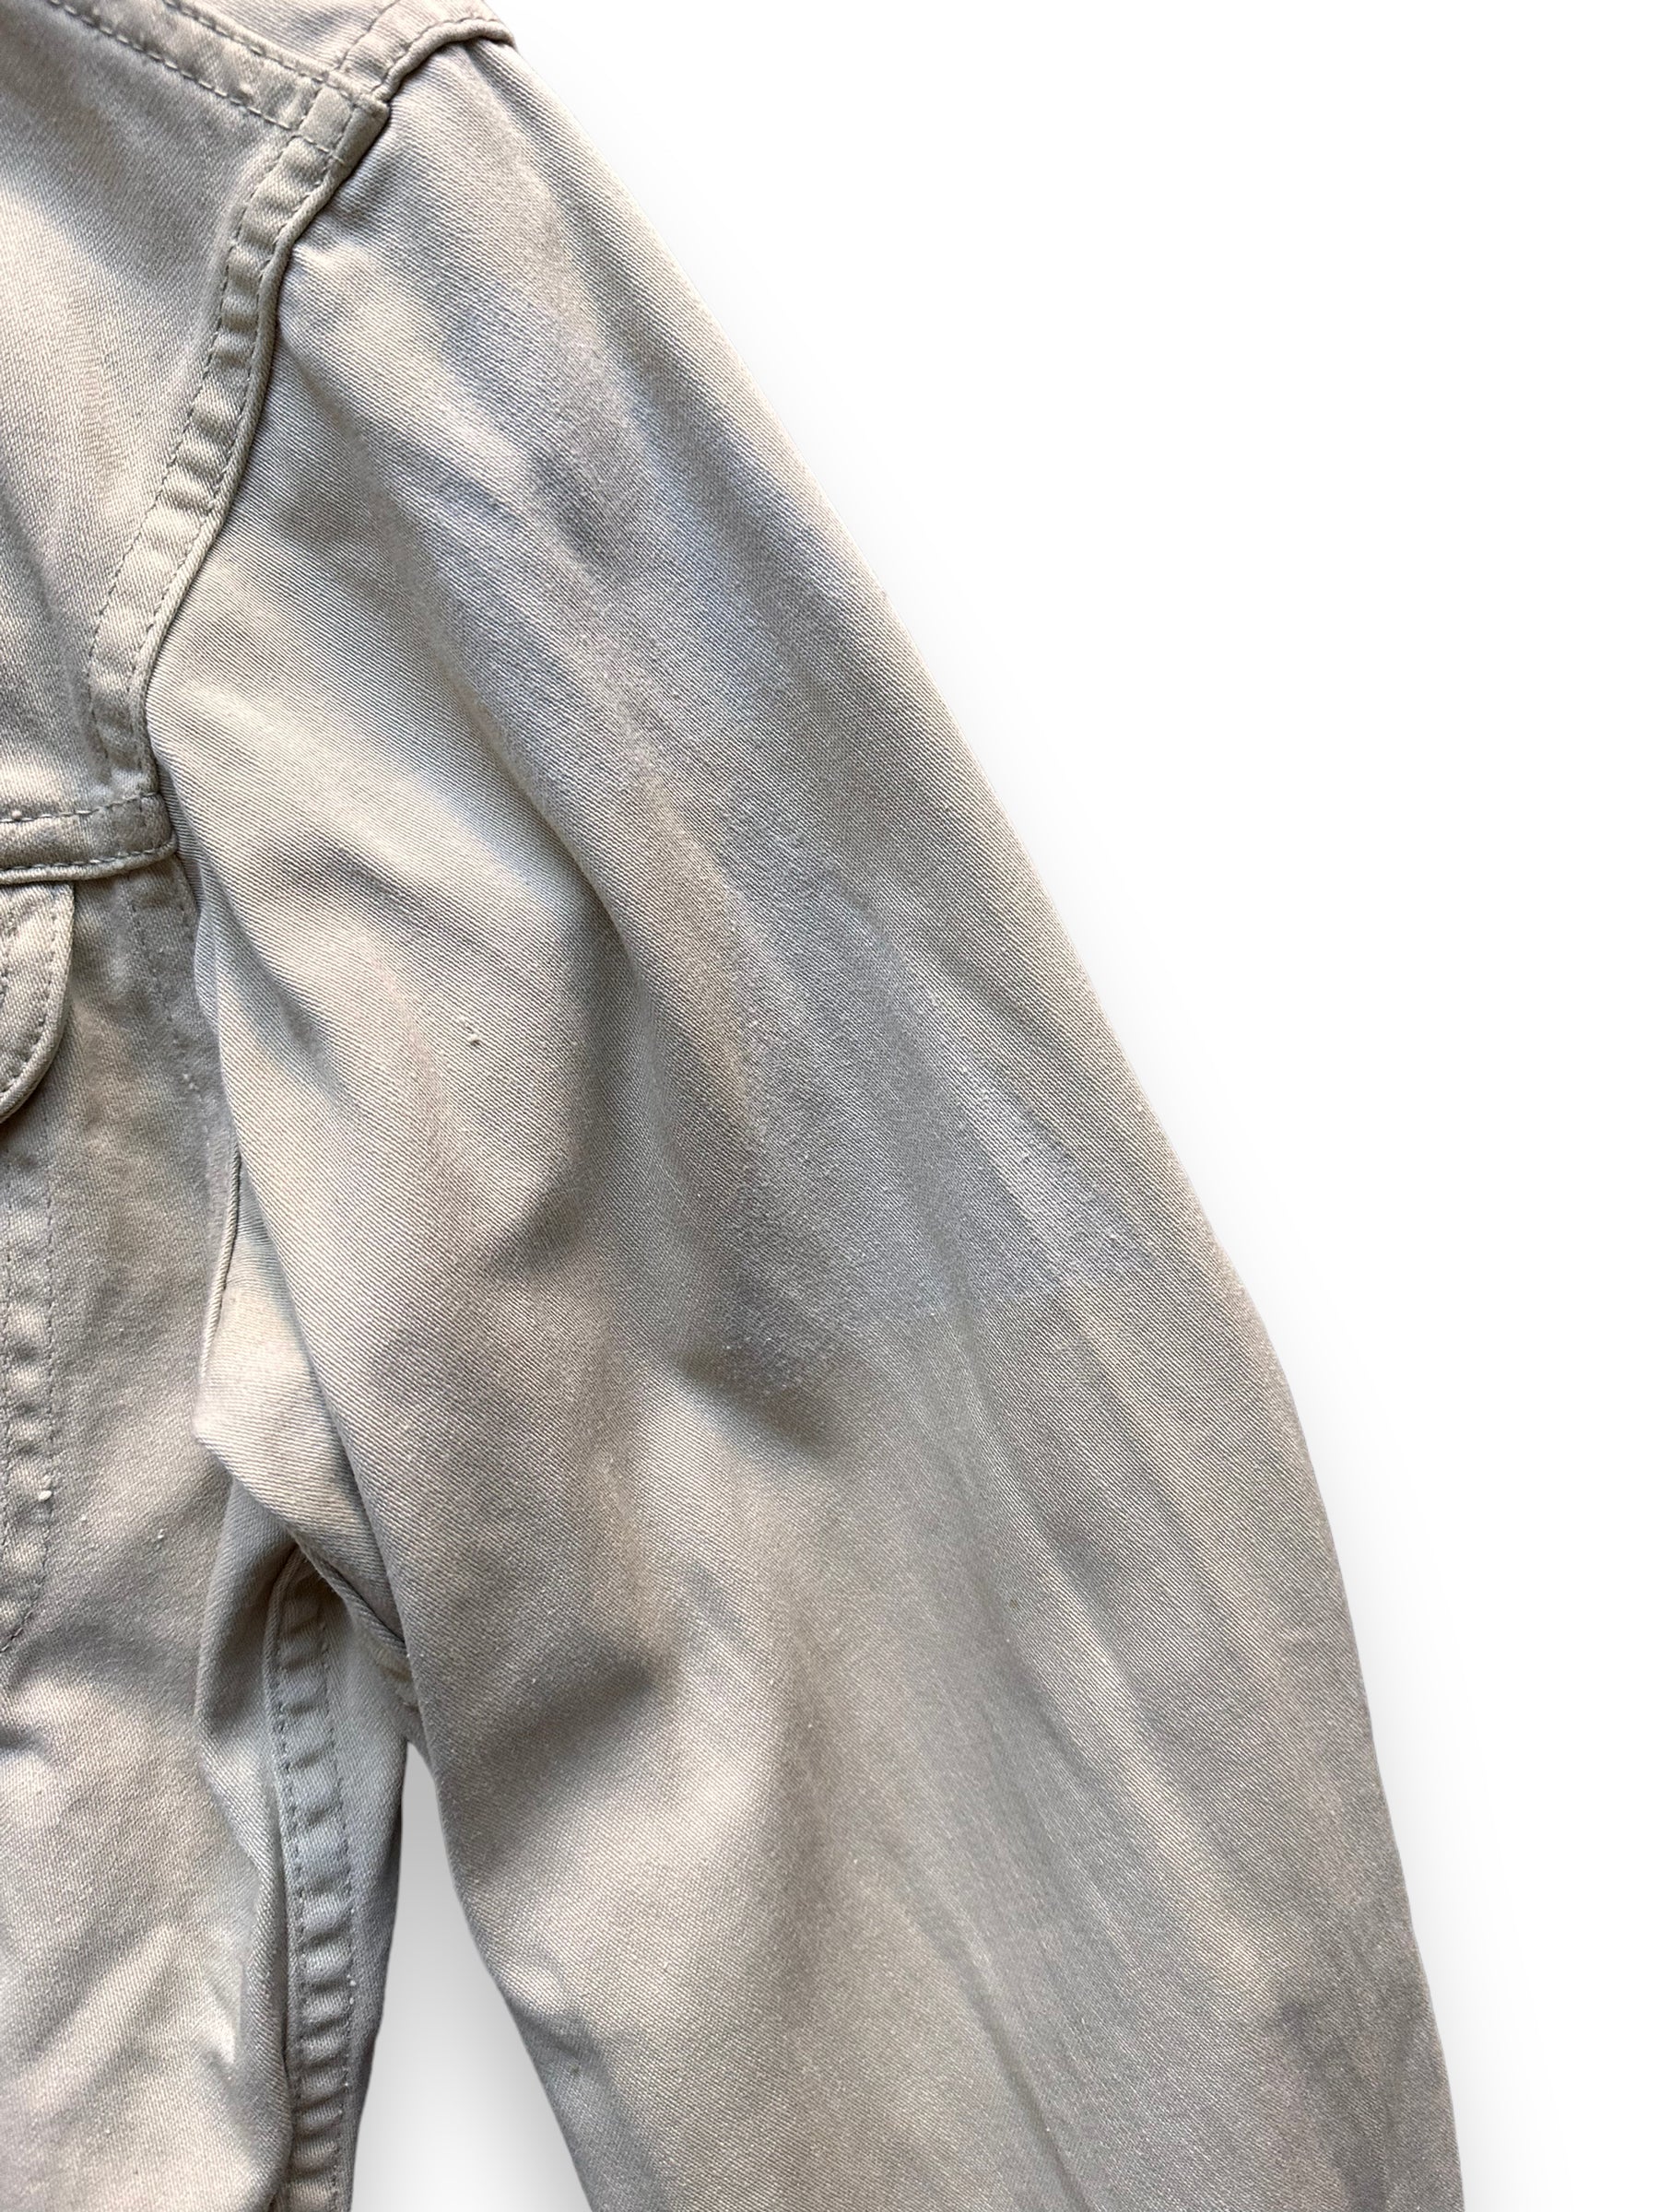 Vintage Lee Westerner Jacket SZ 36R | Vintage Lee 100-J Denim Workwear  Seattle | Seattle Vintage Denim